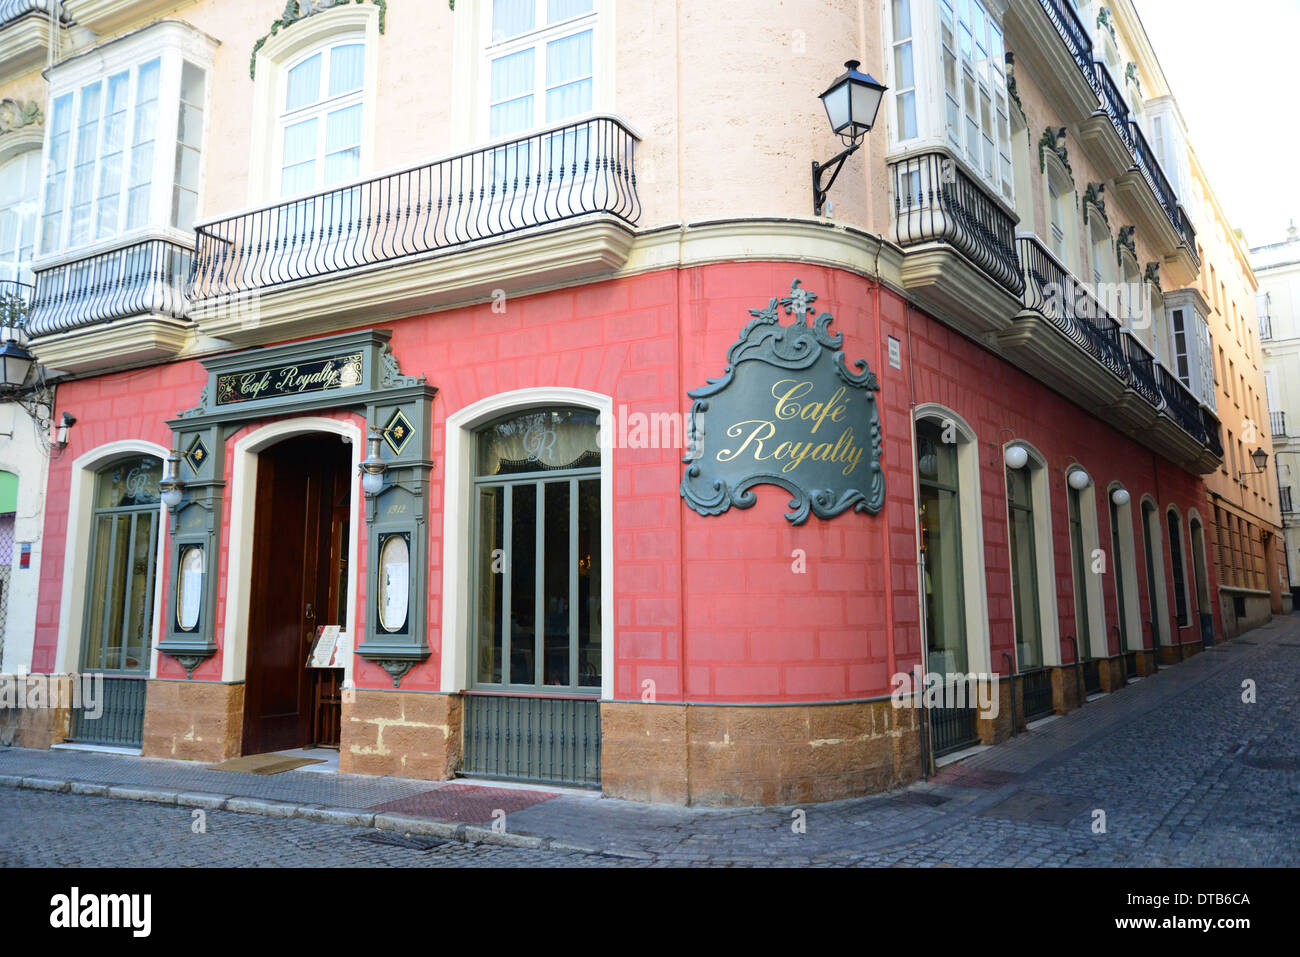 Cafe Royalty, Plaza Candelaria, Old Town, Cádiz, Cádiz Province, Andalusia, Spain Stock Photo